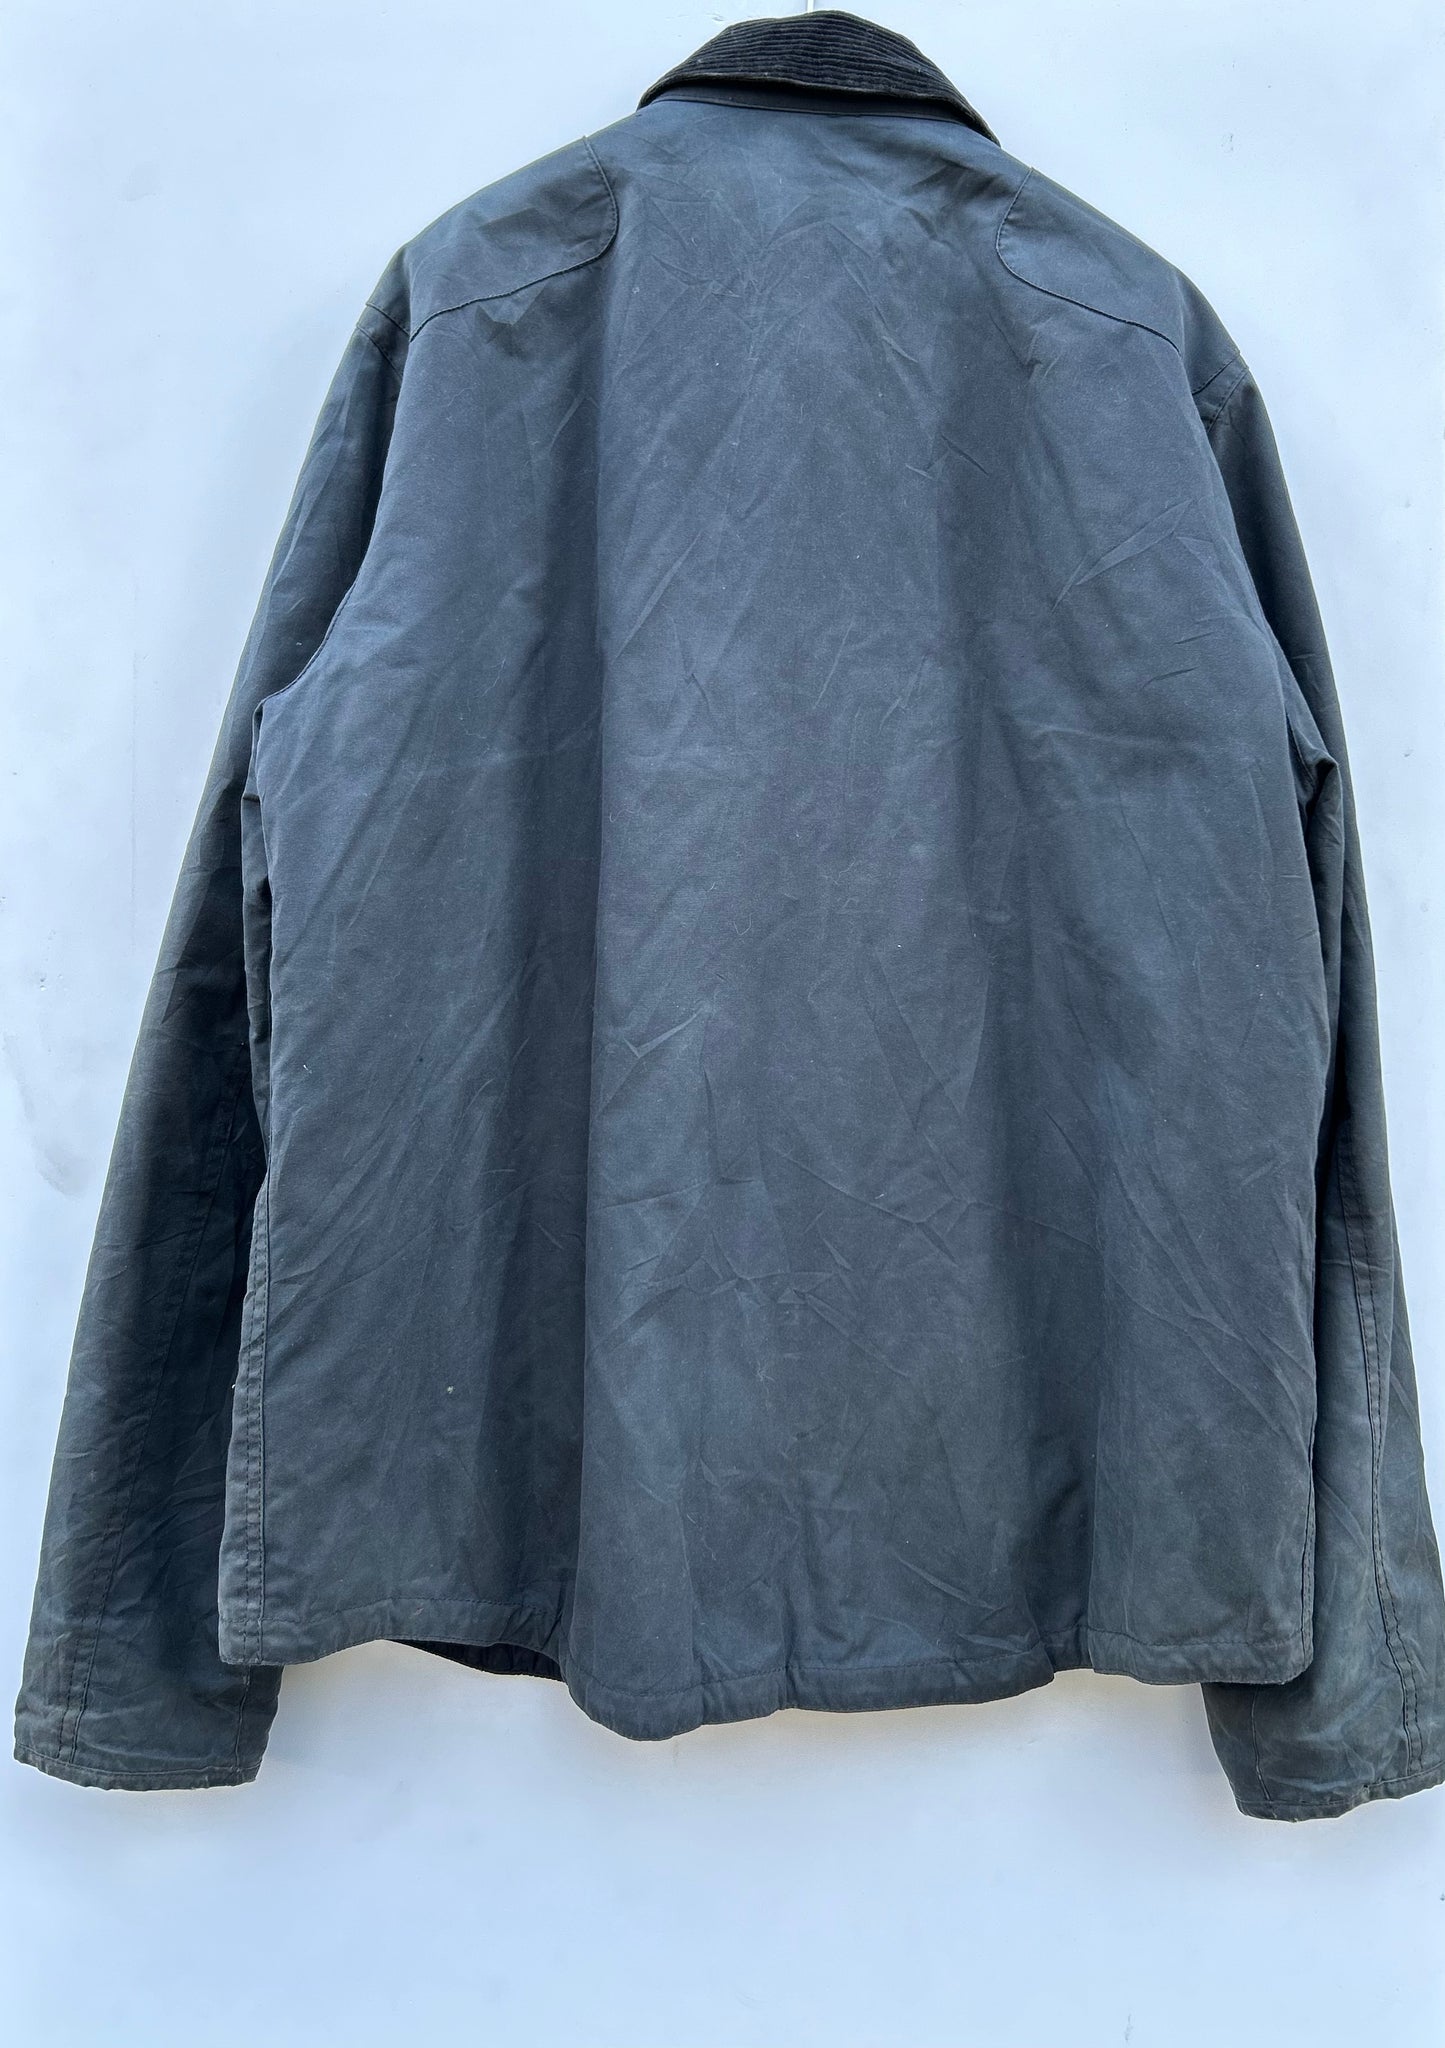 Barbour Giacca Uomo Reelin Blu XLarge- Man Waxed Navy Jacket size XL